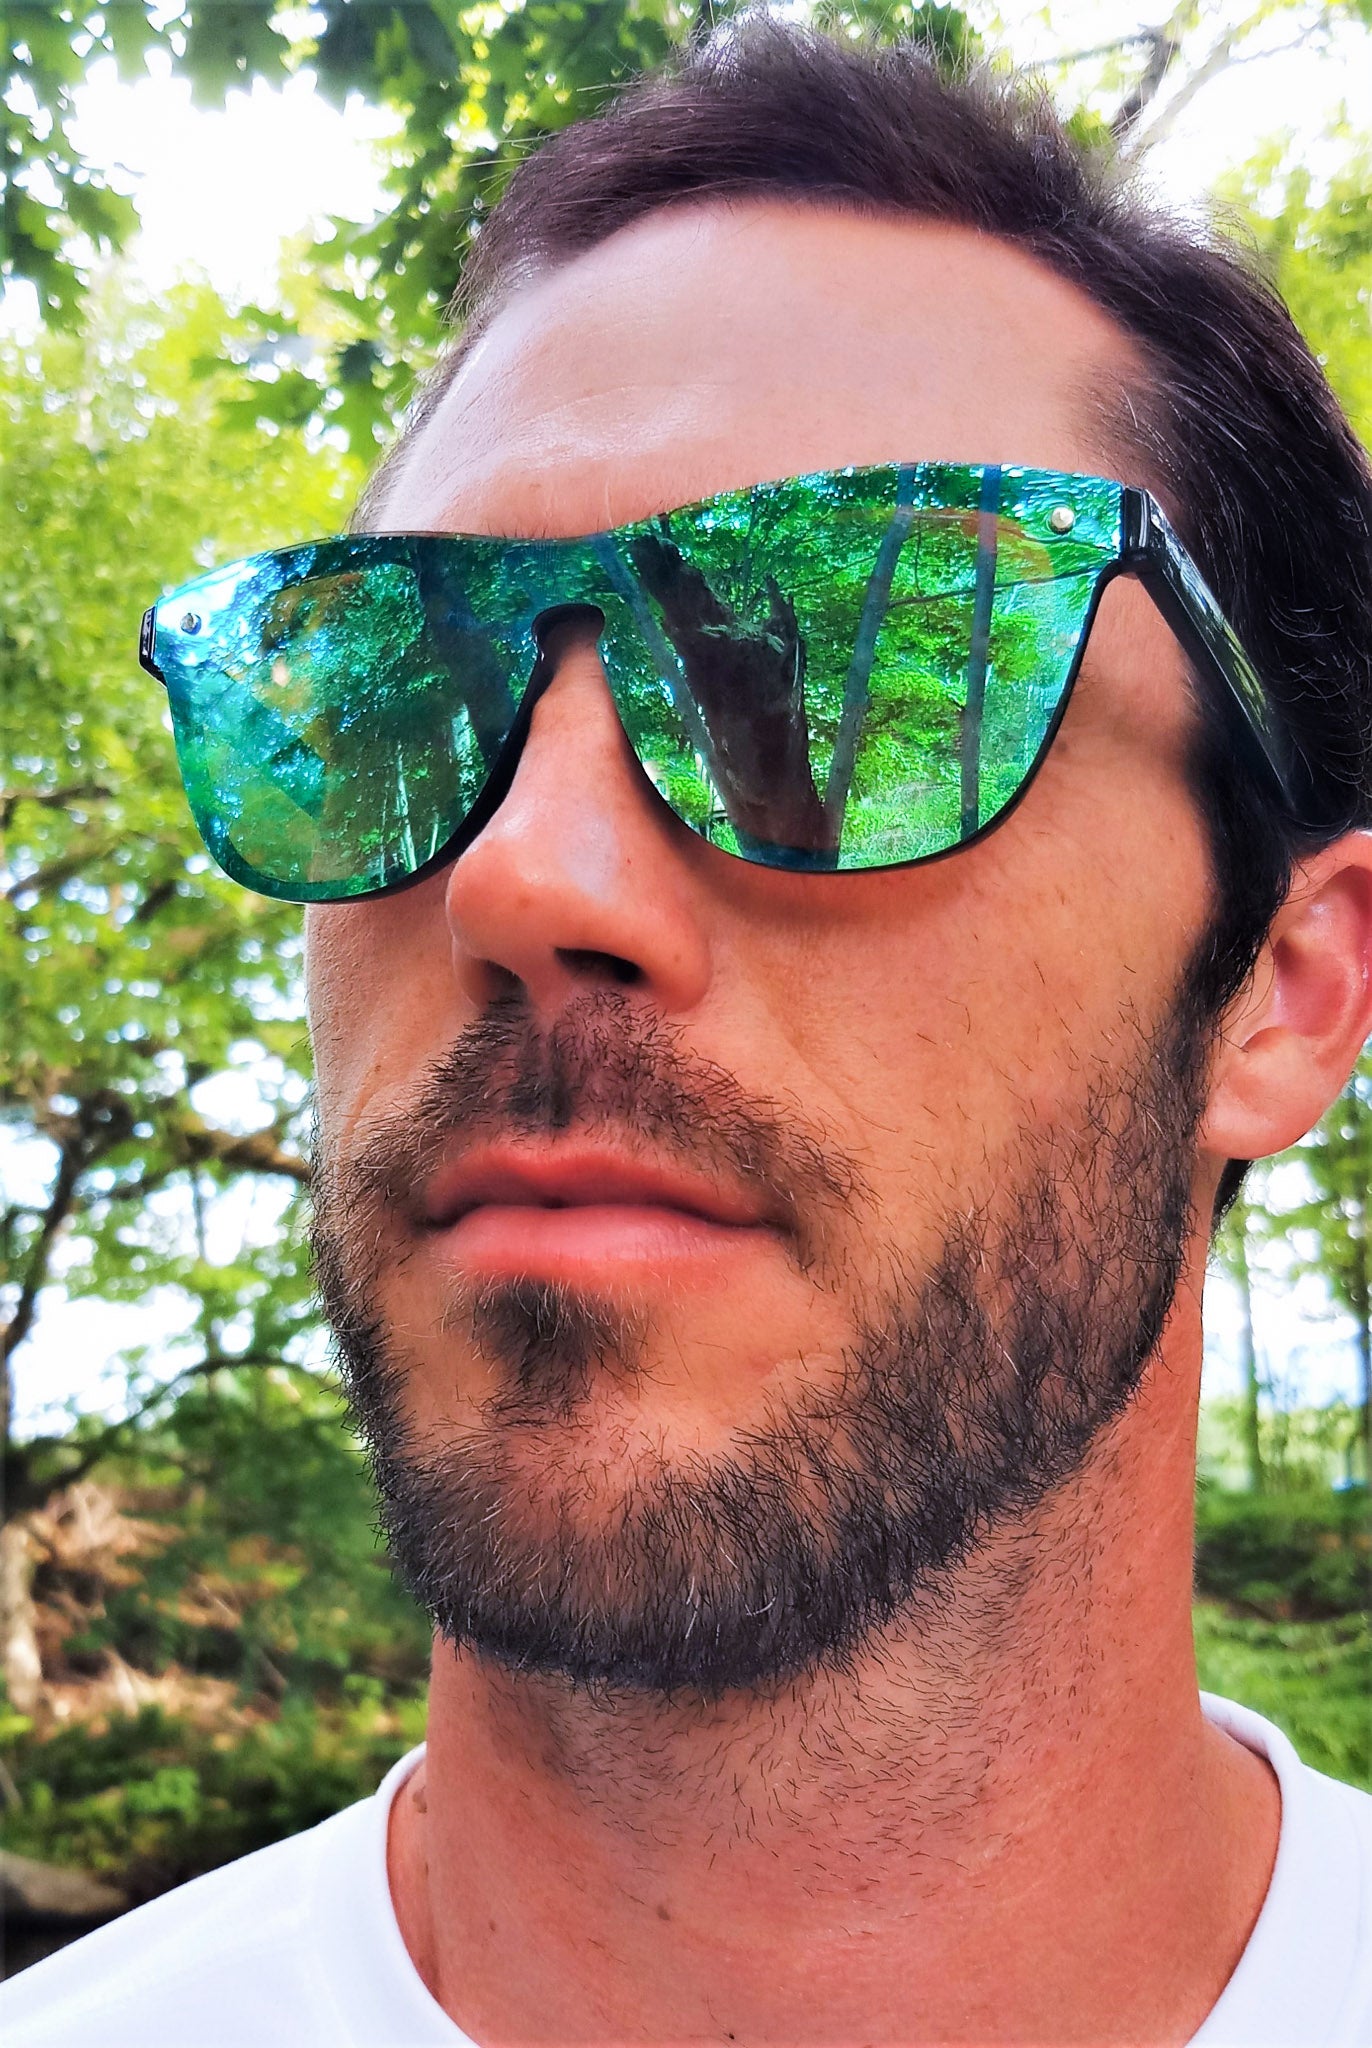 Key West unisex Mirrored Rimless Sunglasses- Vaporwave Futuristic Sunglasses with Blue Mirror Lenses